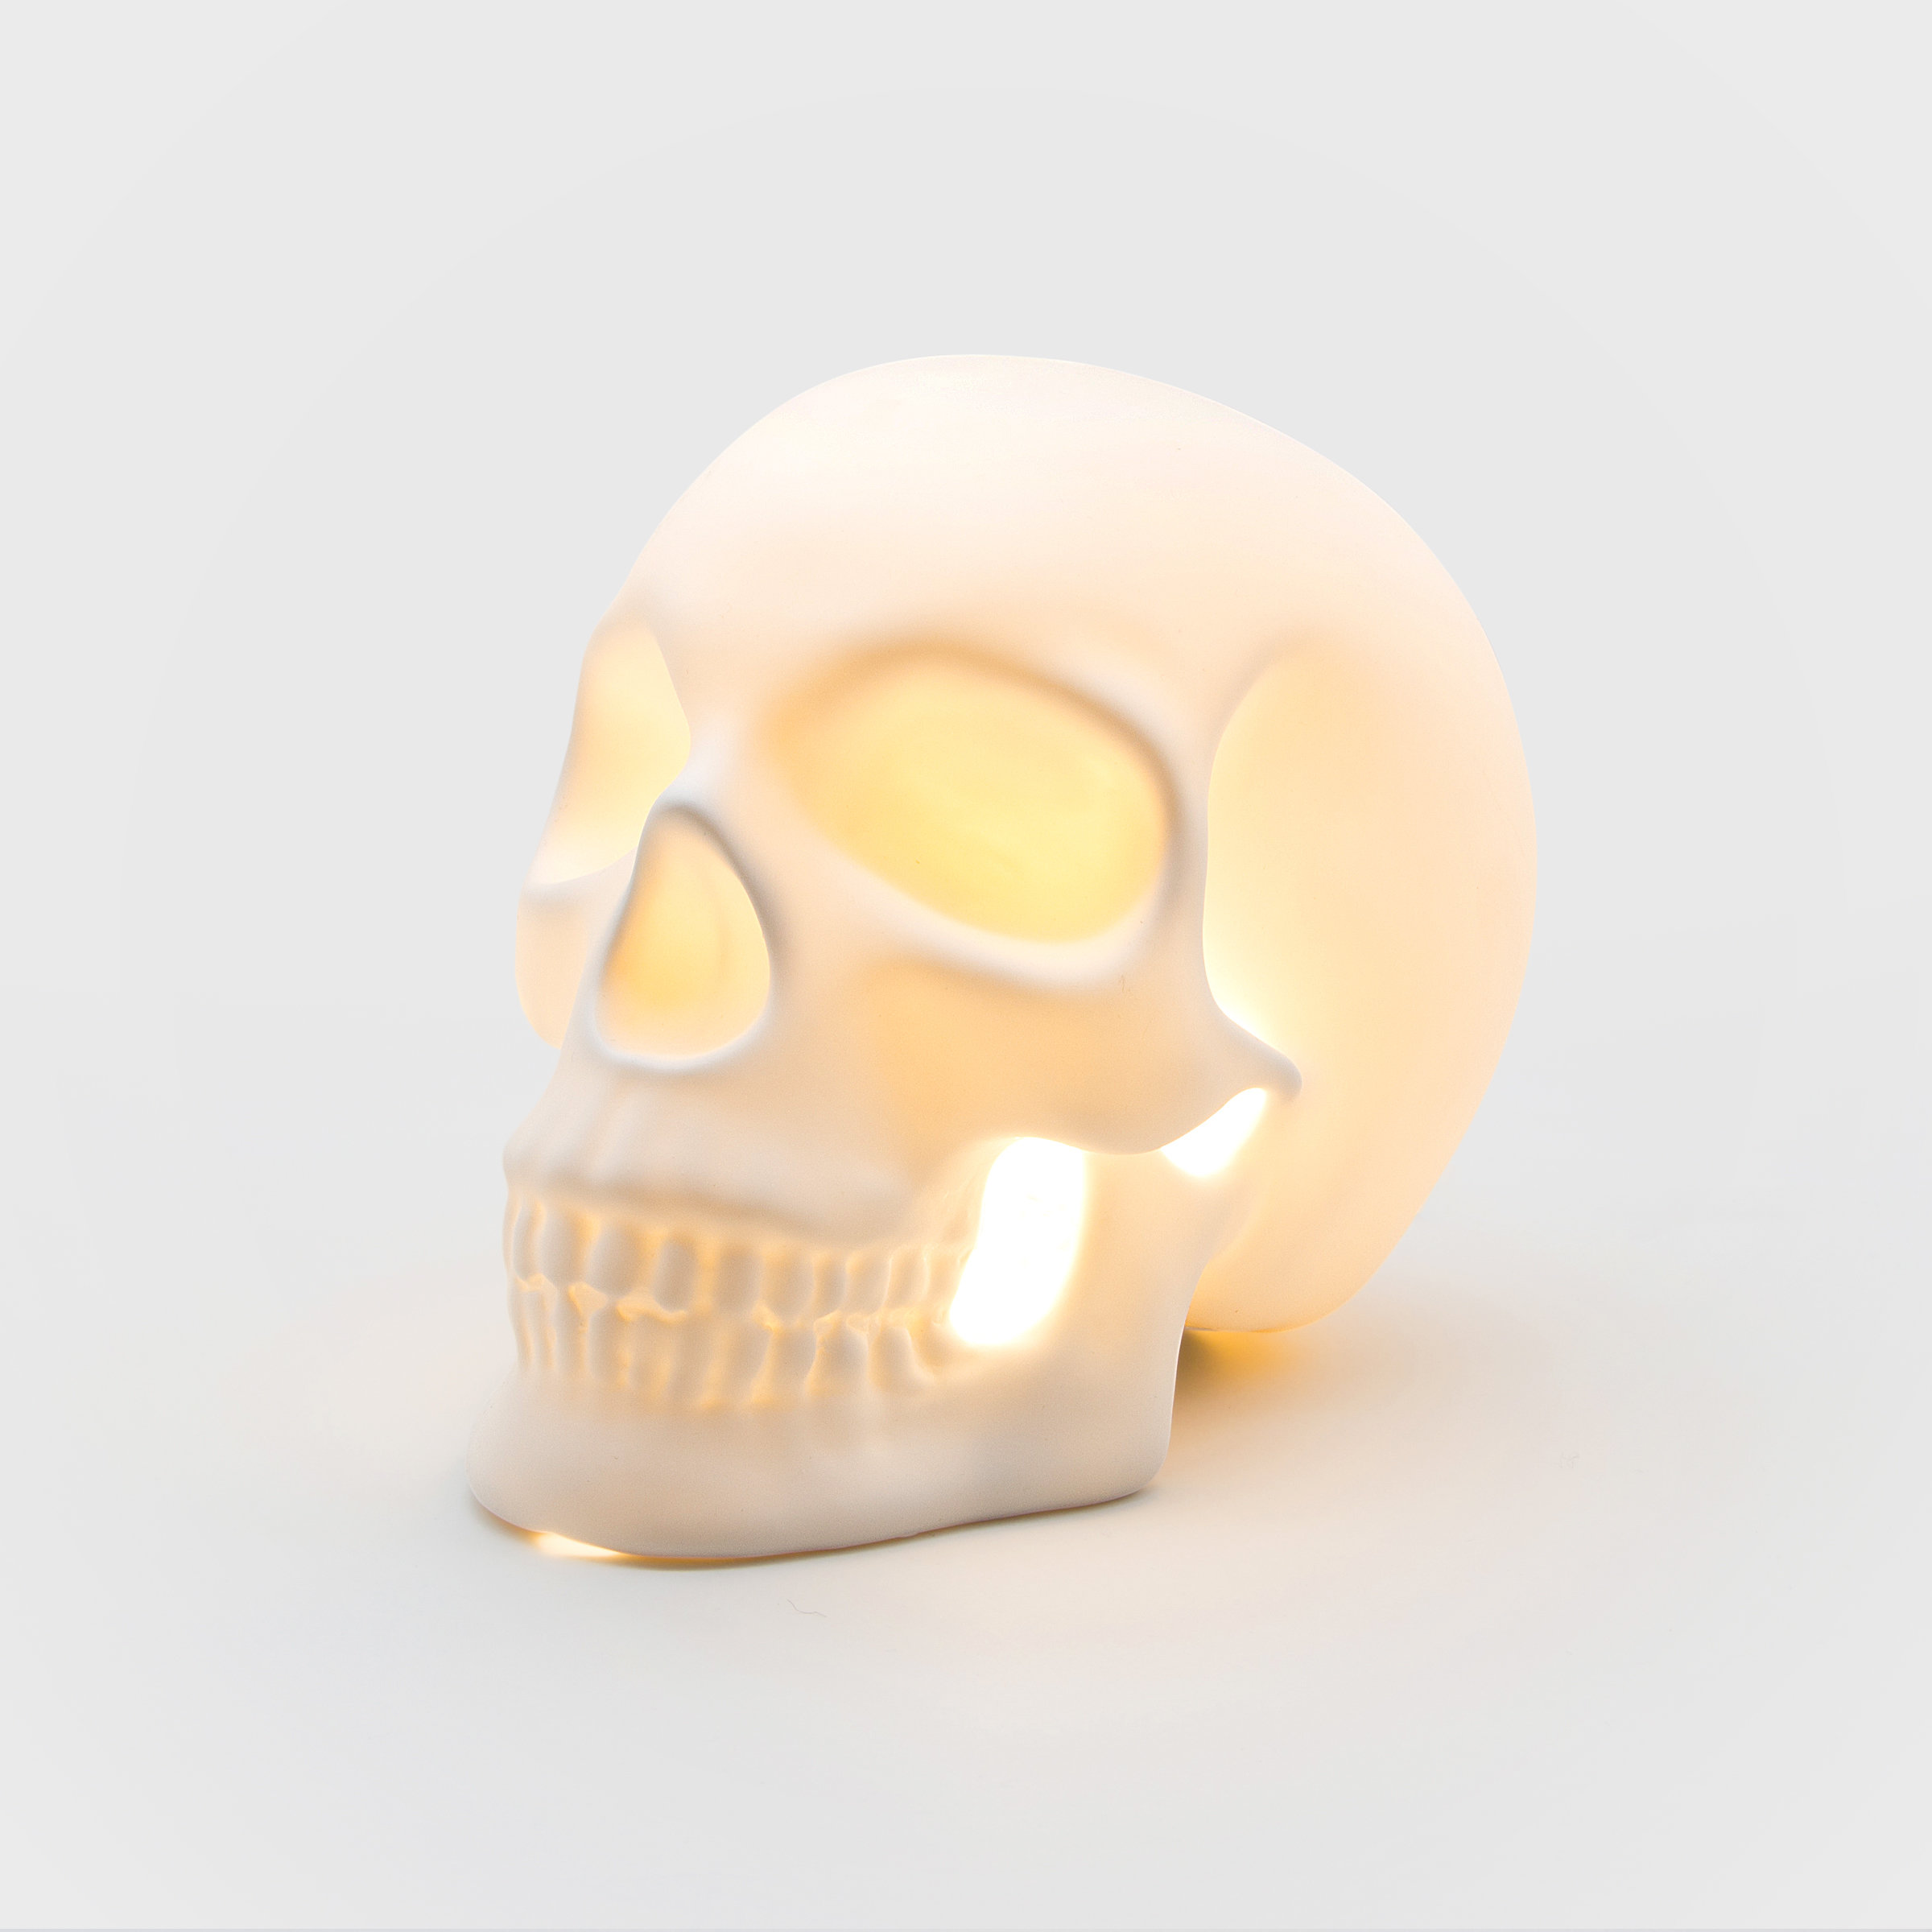 Decorative skull shaped lamp made from ceramic